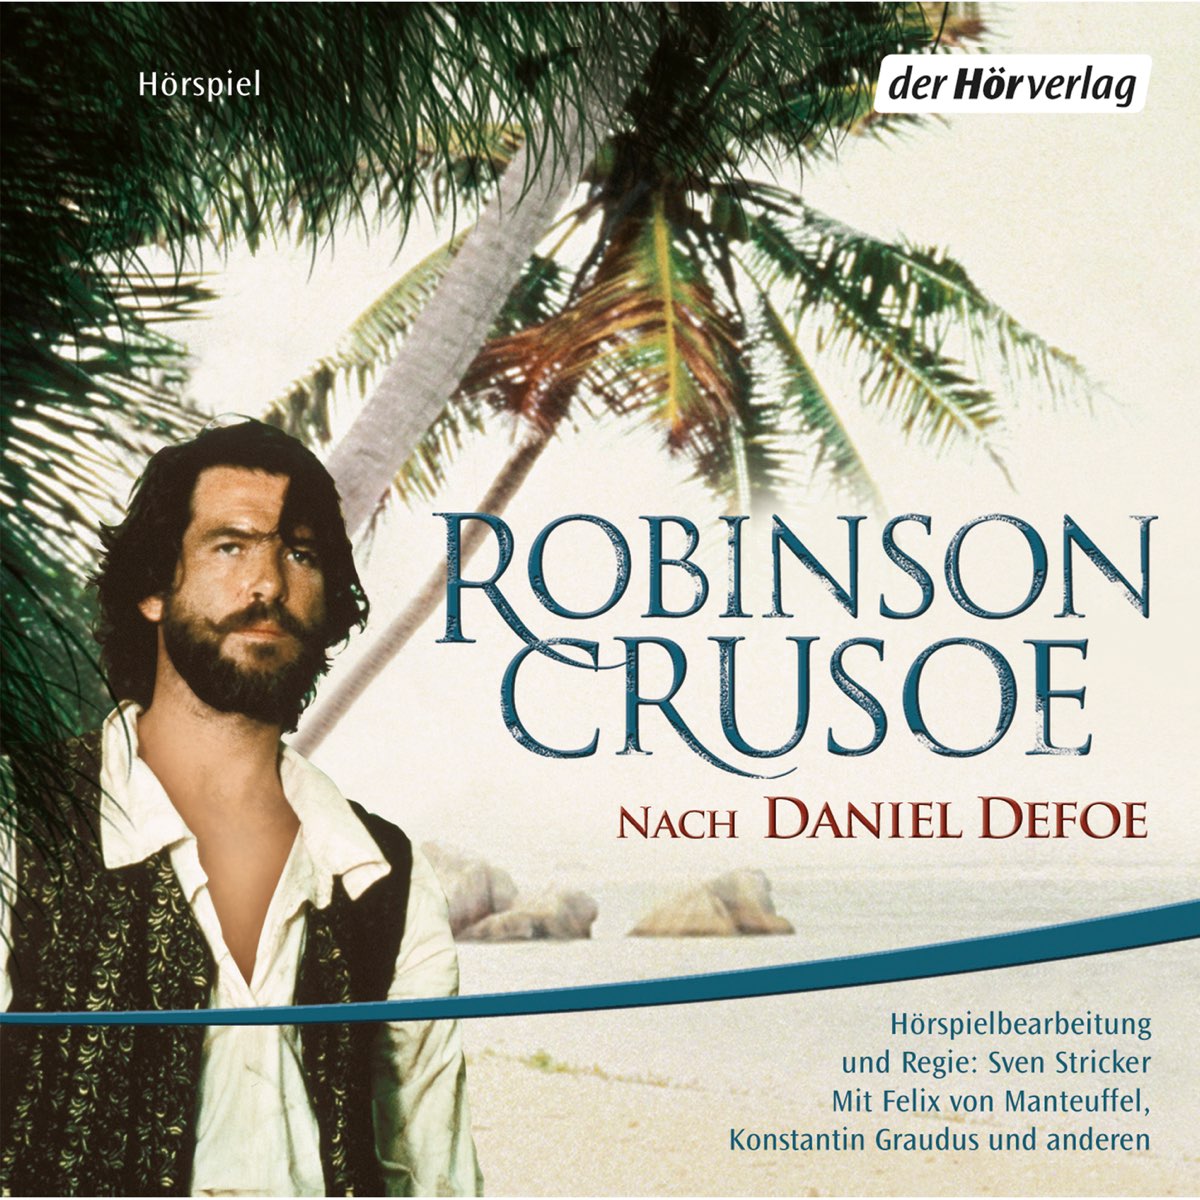 Аудио робинзон крузо слушать. Defoe Daniel "Robinson Crusoe". Песня Робинзон. Daniel d. "Robinson Crusoe".